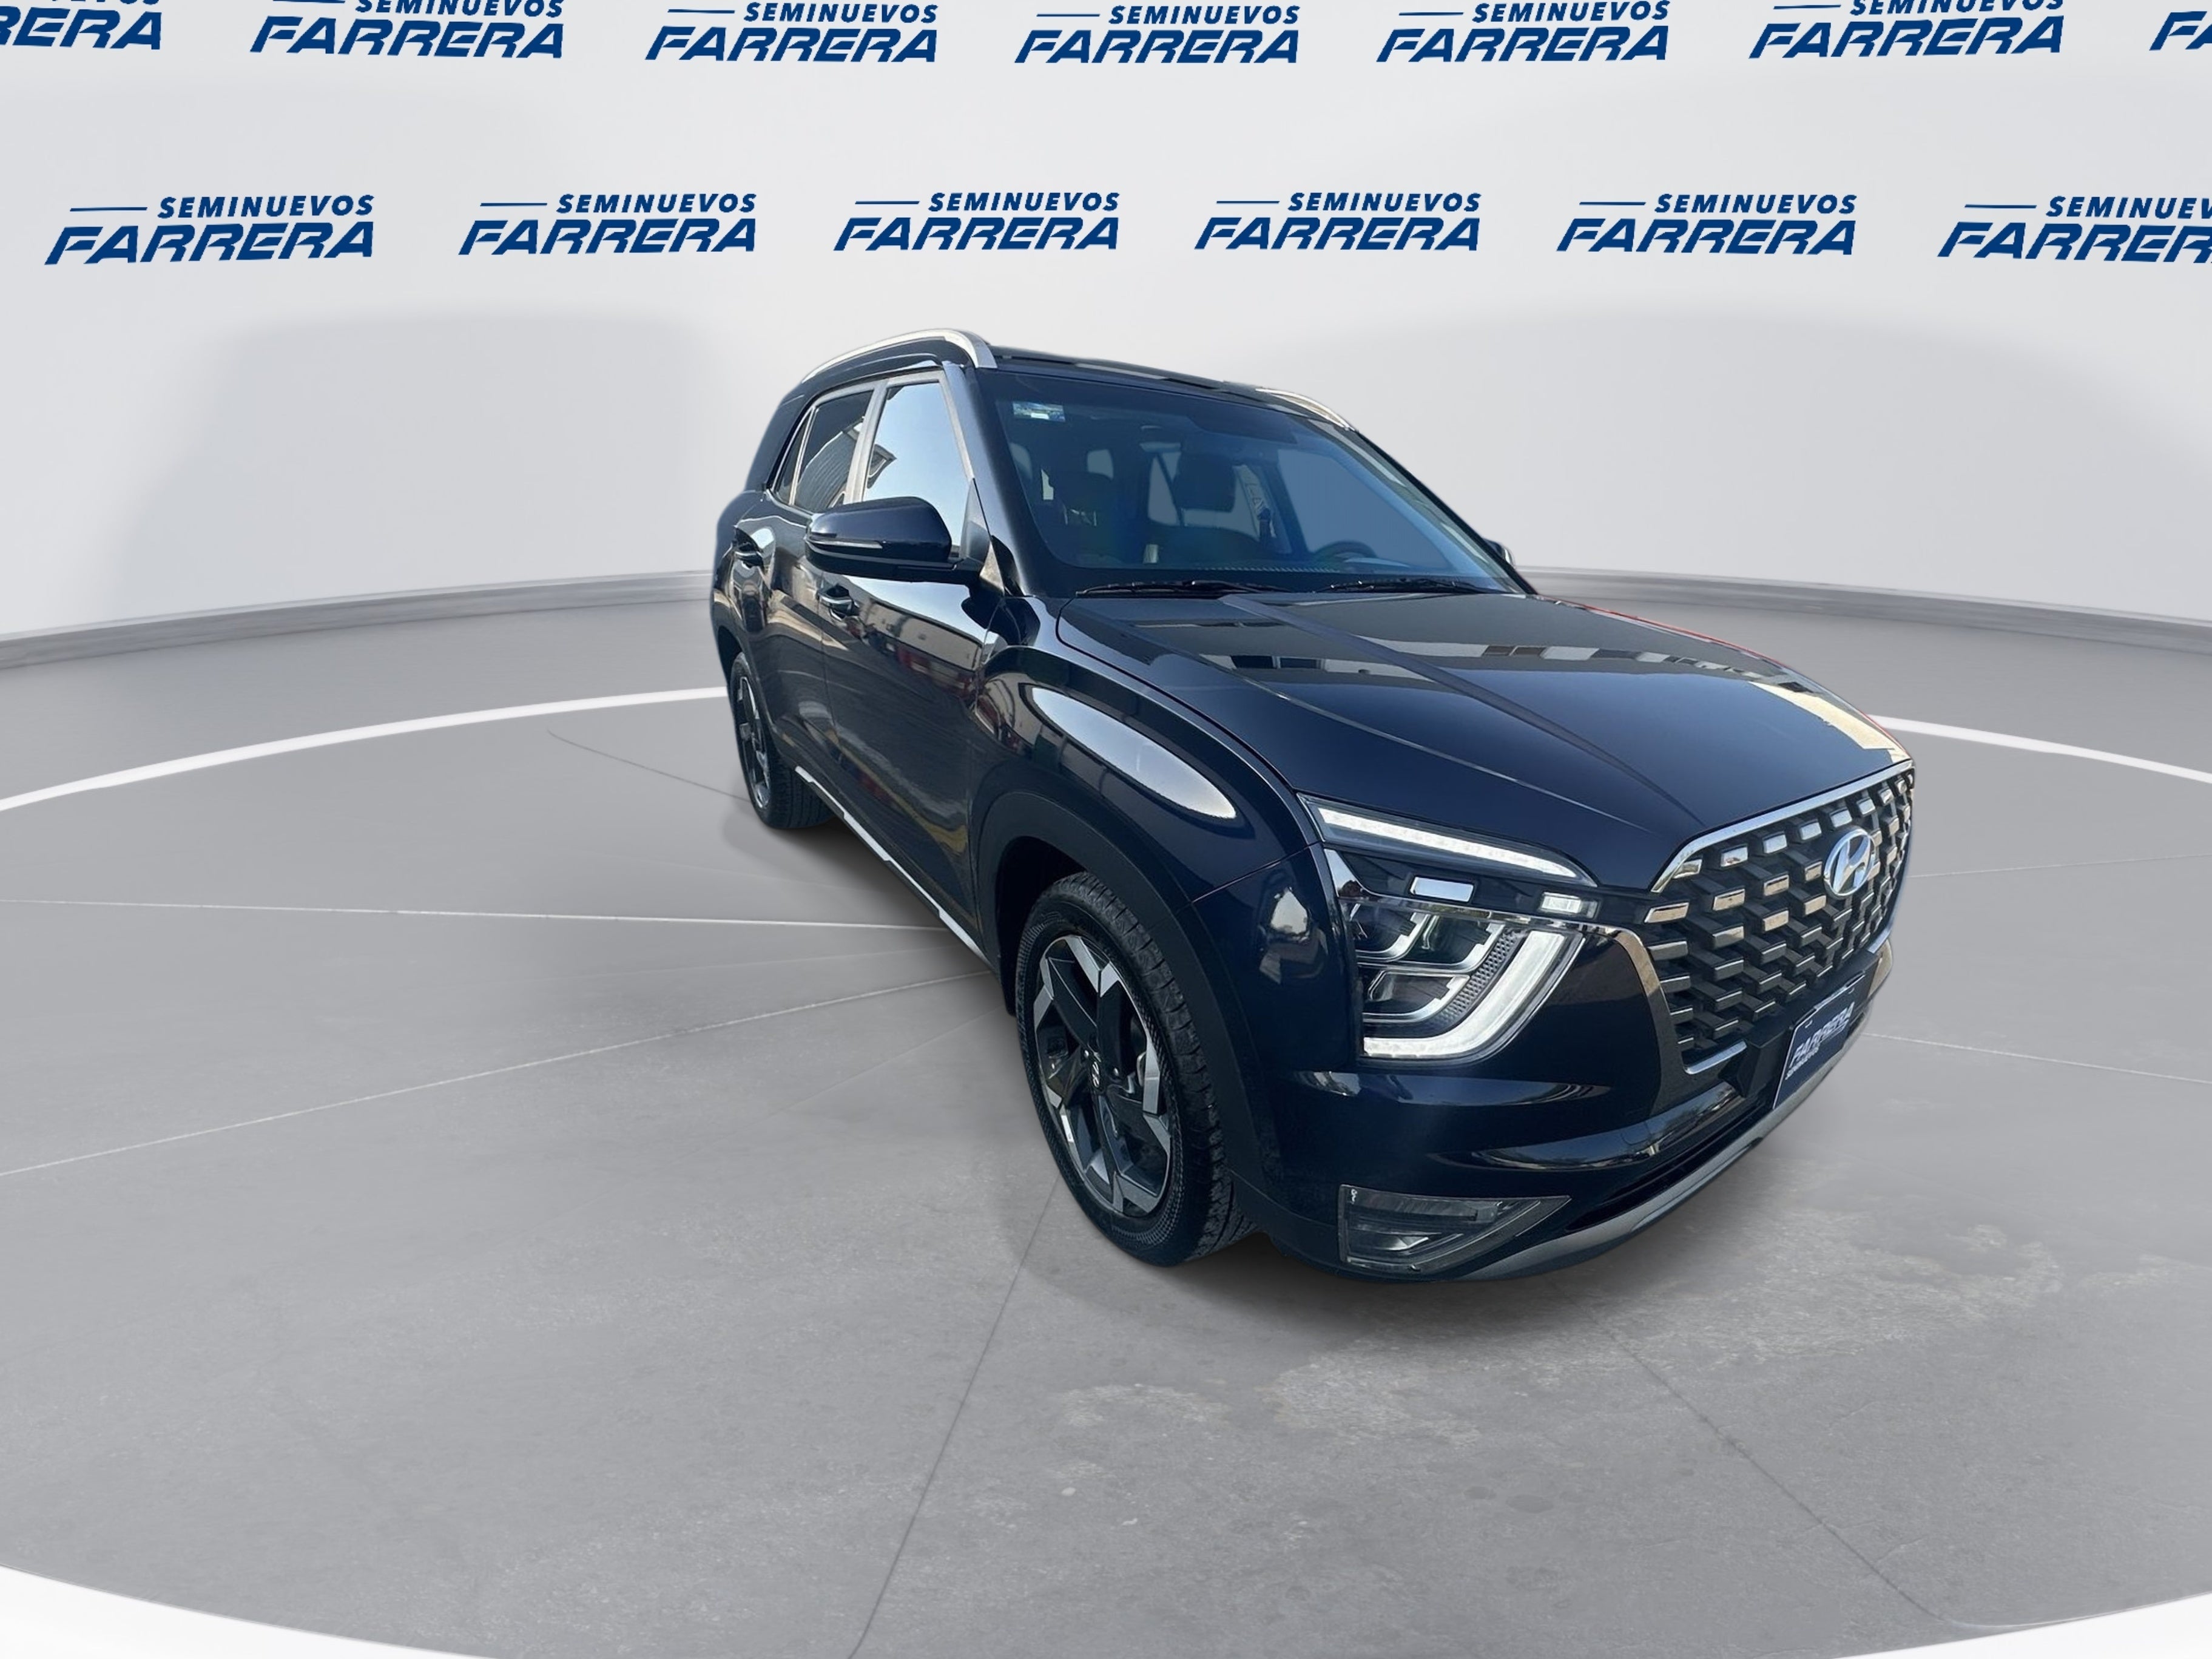 2023 Hyundai Creta Grand 2.0 Limited At